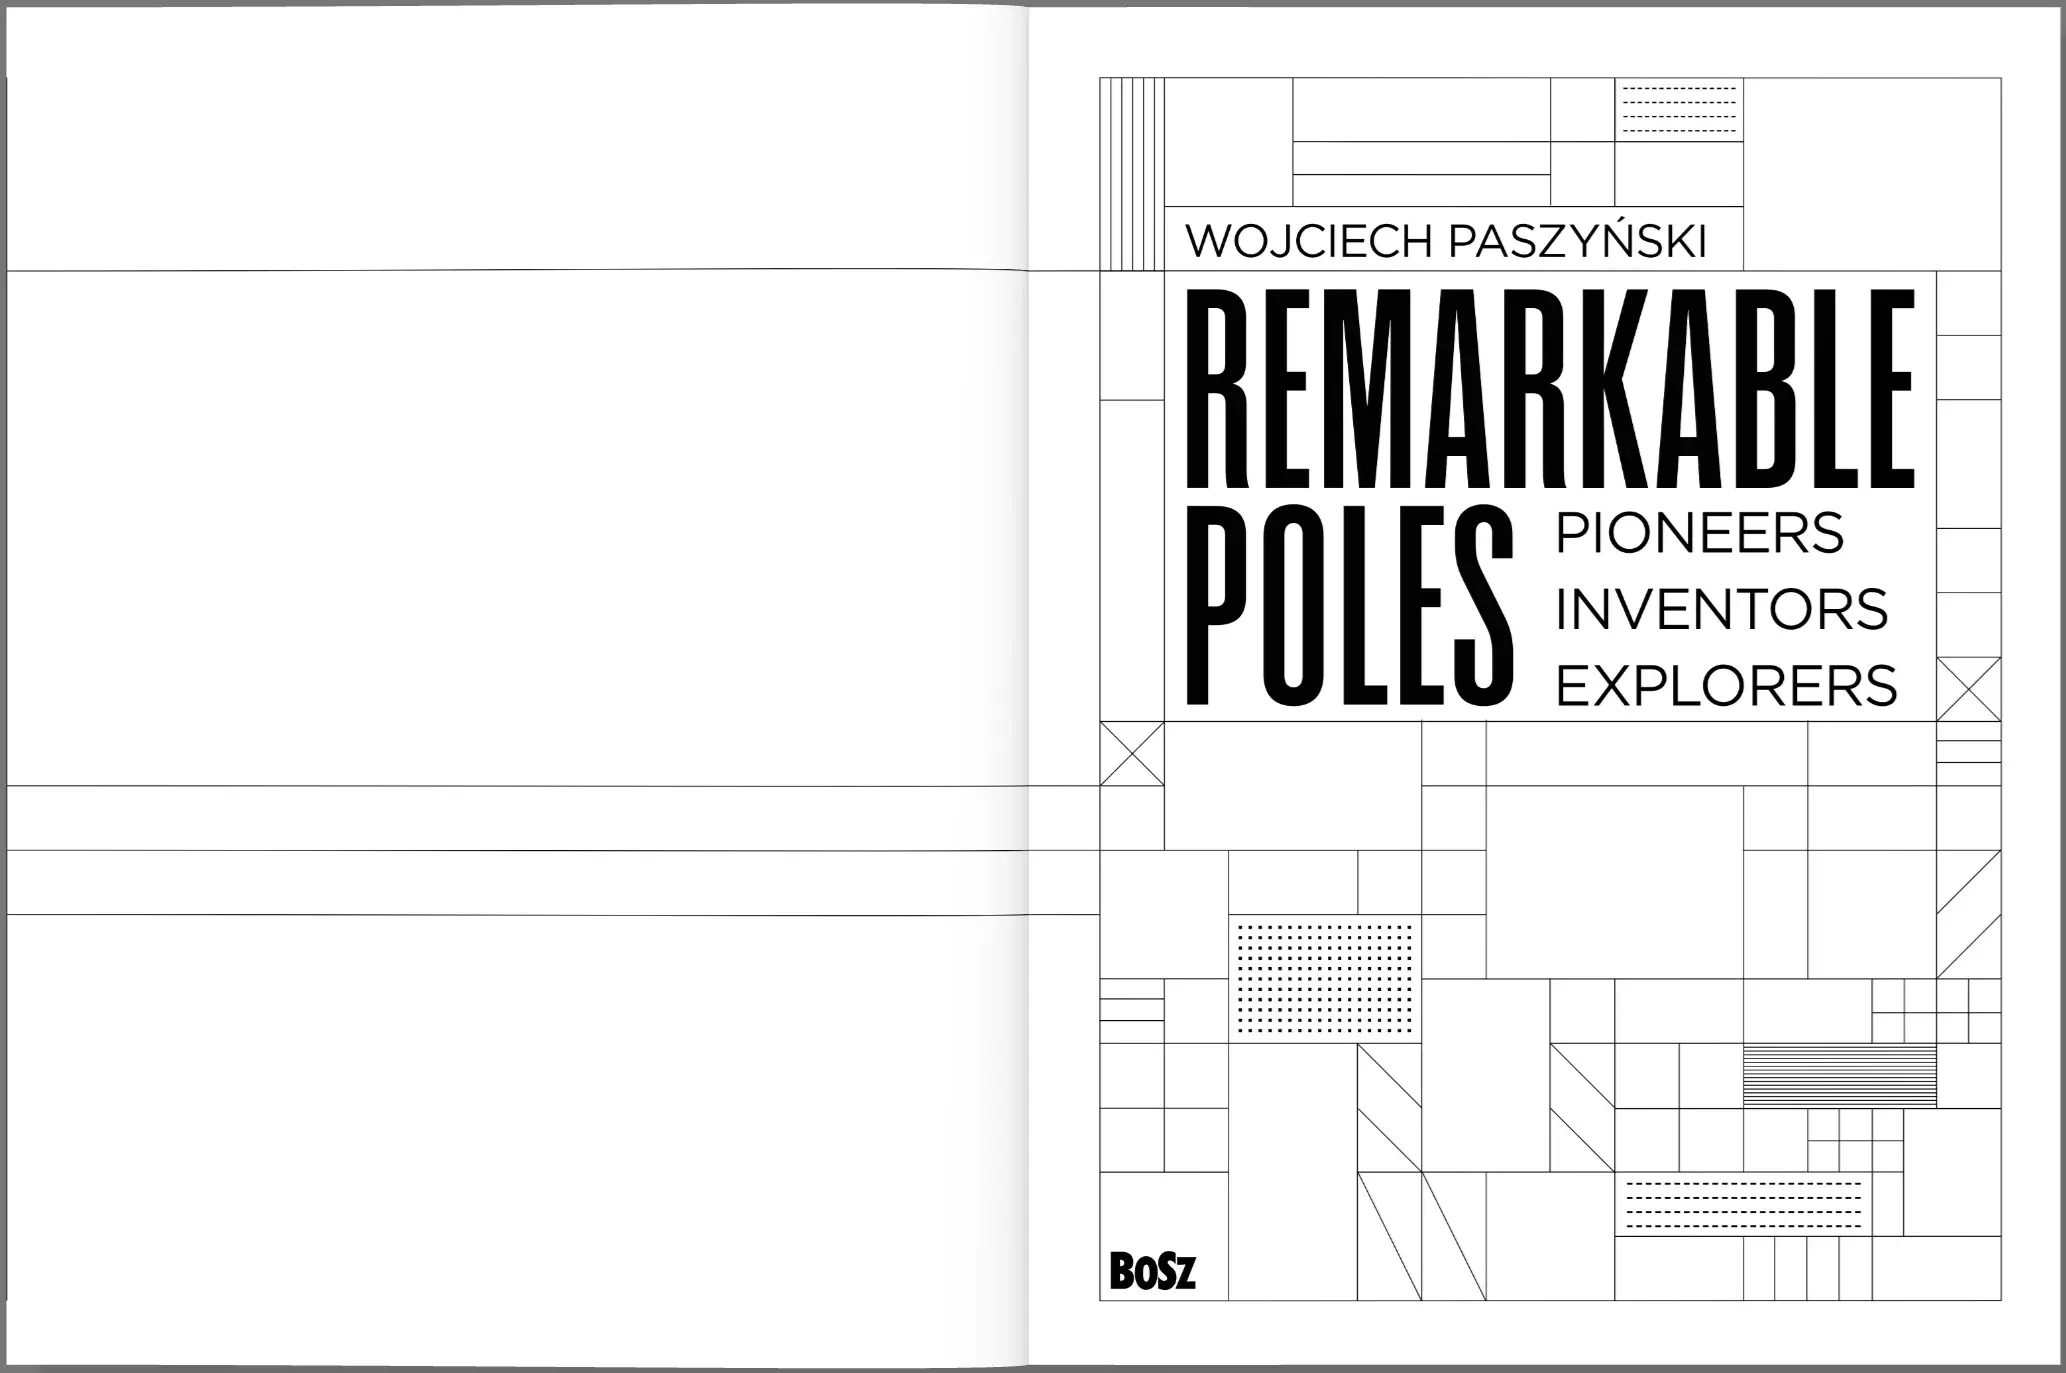 Remarkable Poles. Pioneers, inventors, explorers – pages